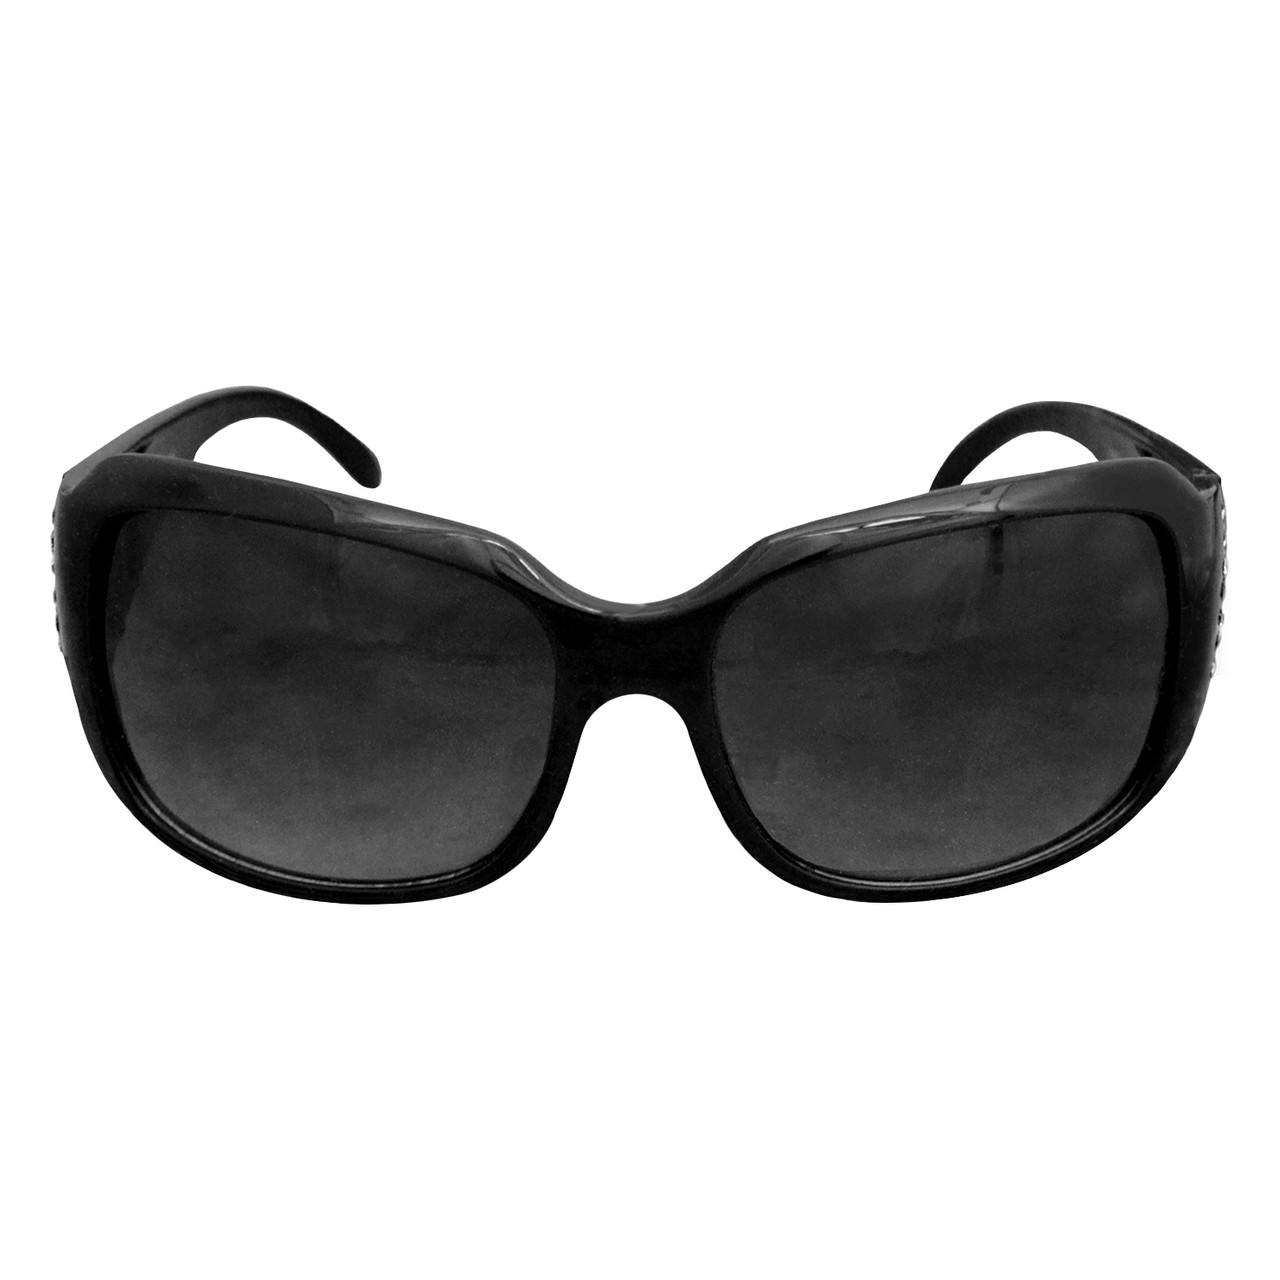 Virginia Cavaliers Brunch Fashion College Sunglasses (Black)